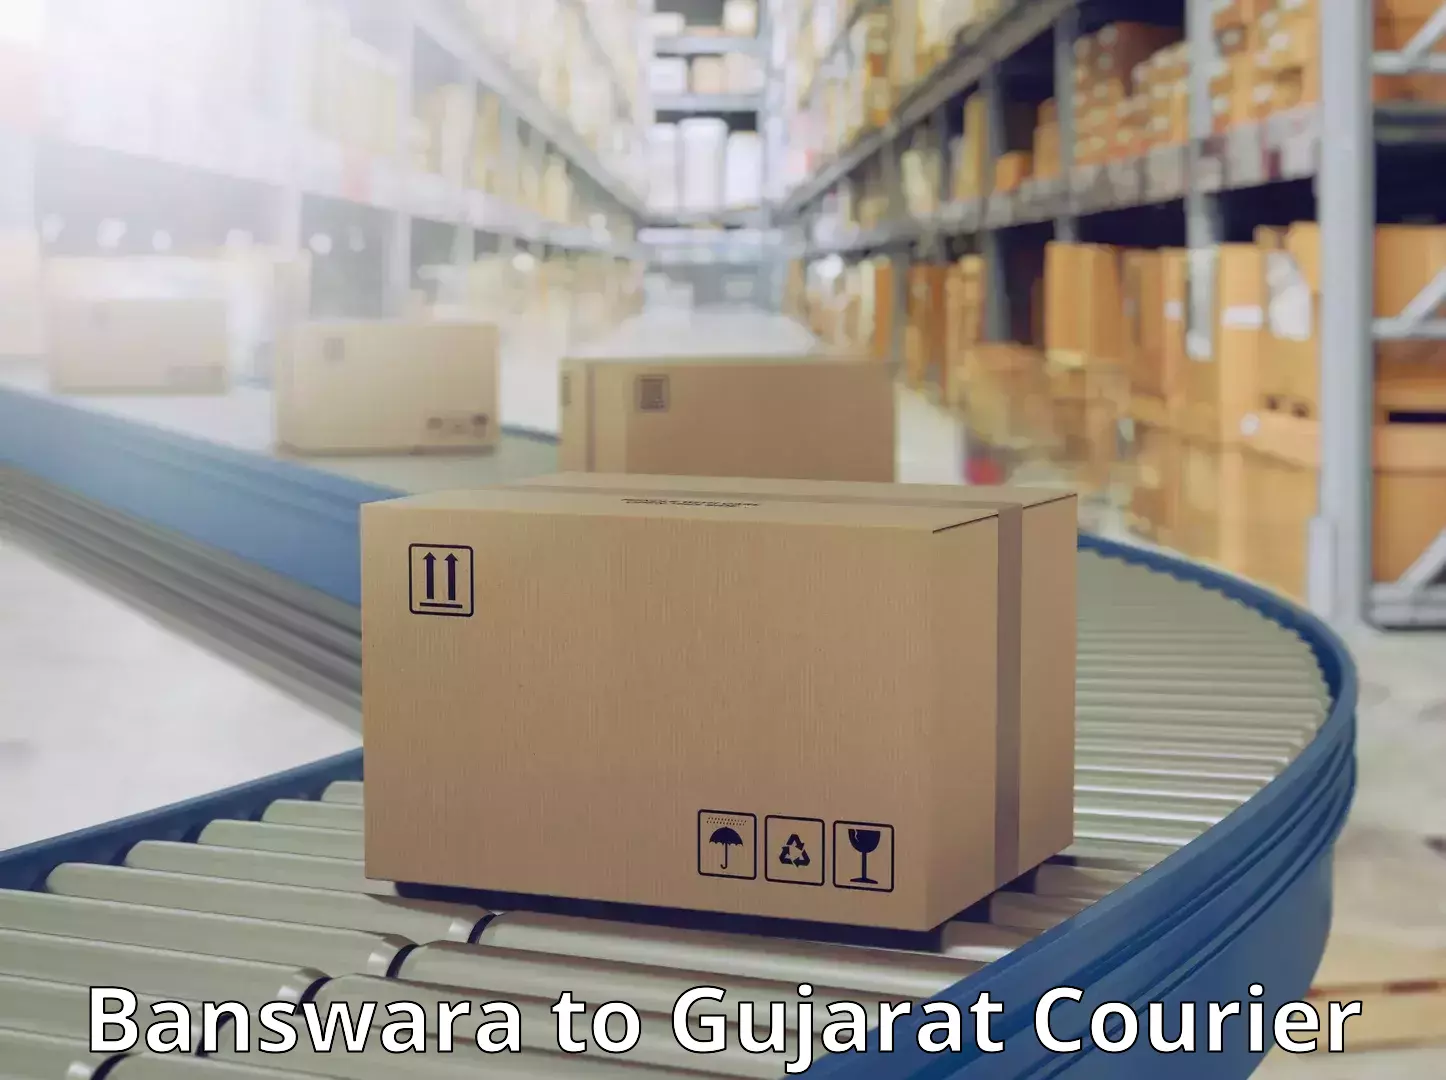 Courier service innovation Banswara to Surat